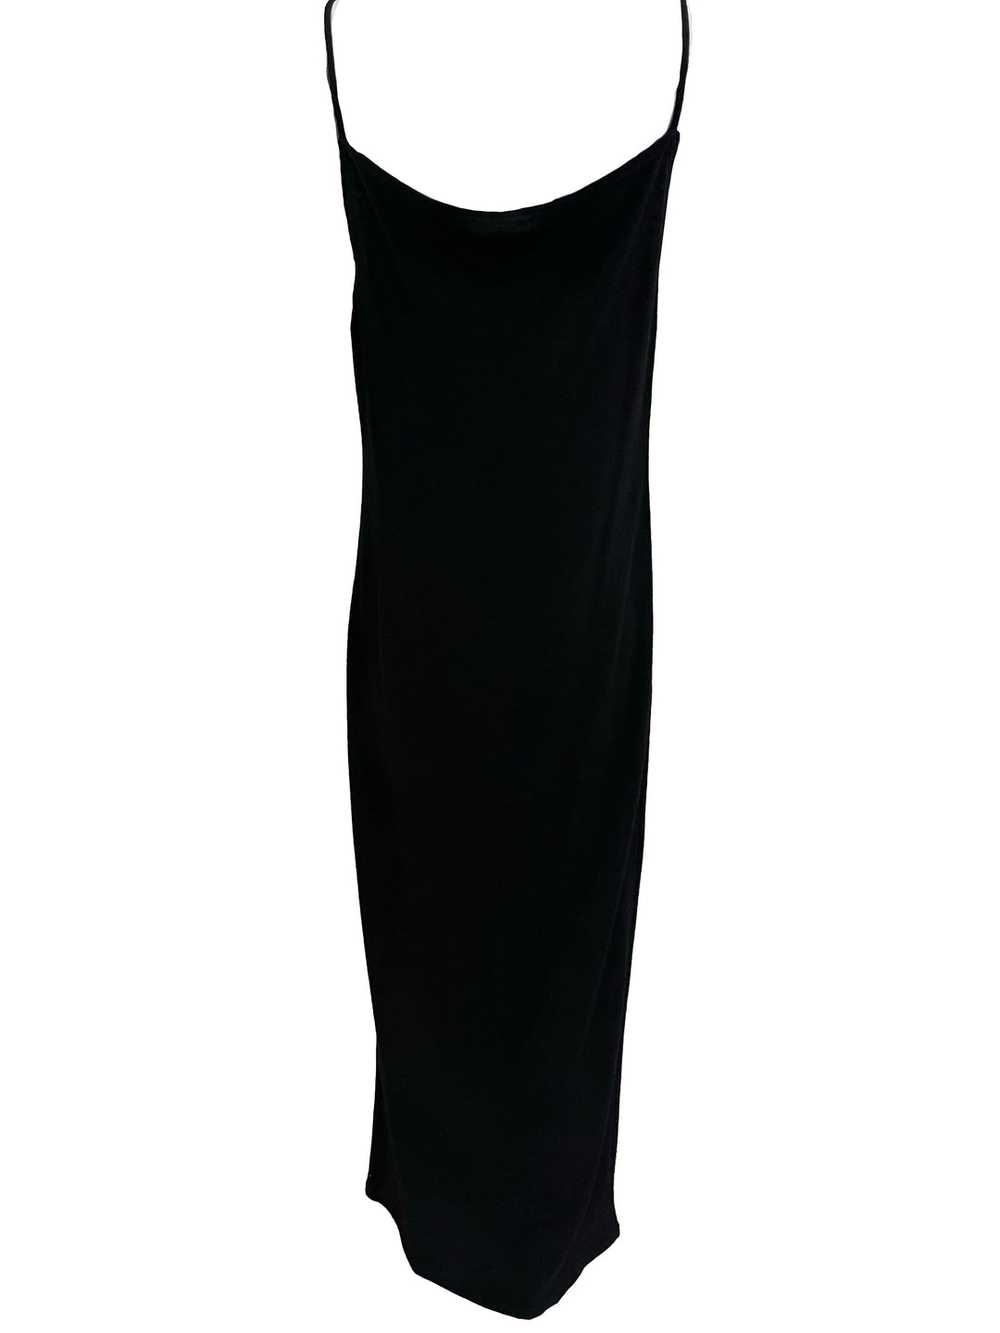 Krizia 90s Black Cashmere Slip Dress - image 3